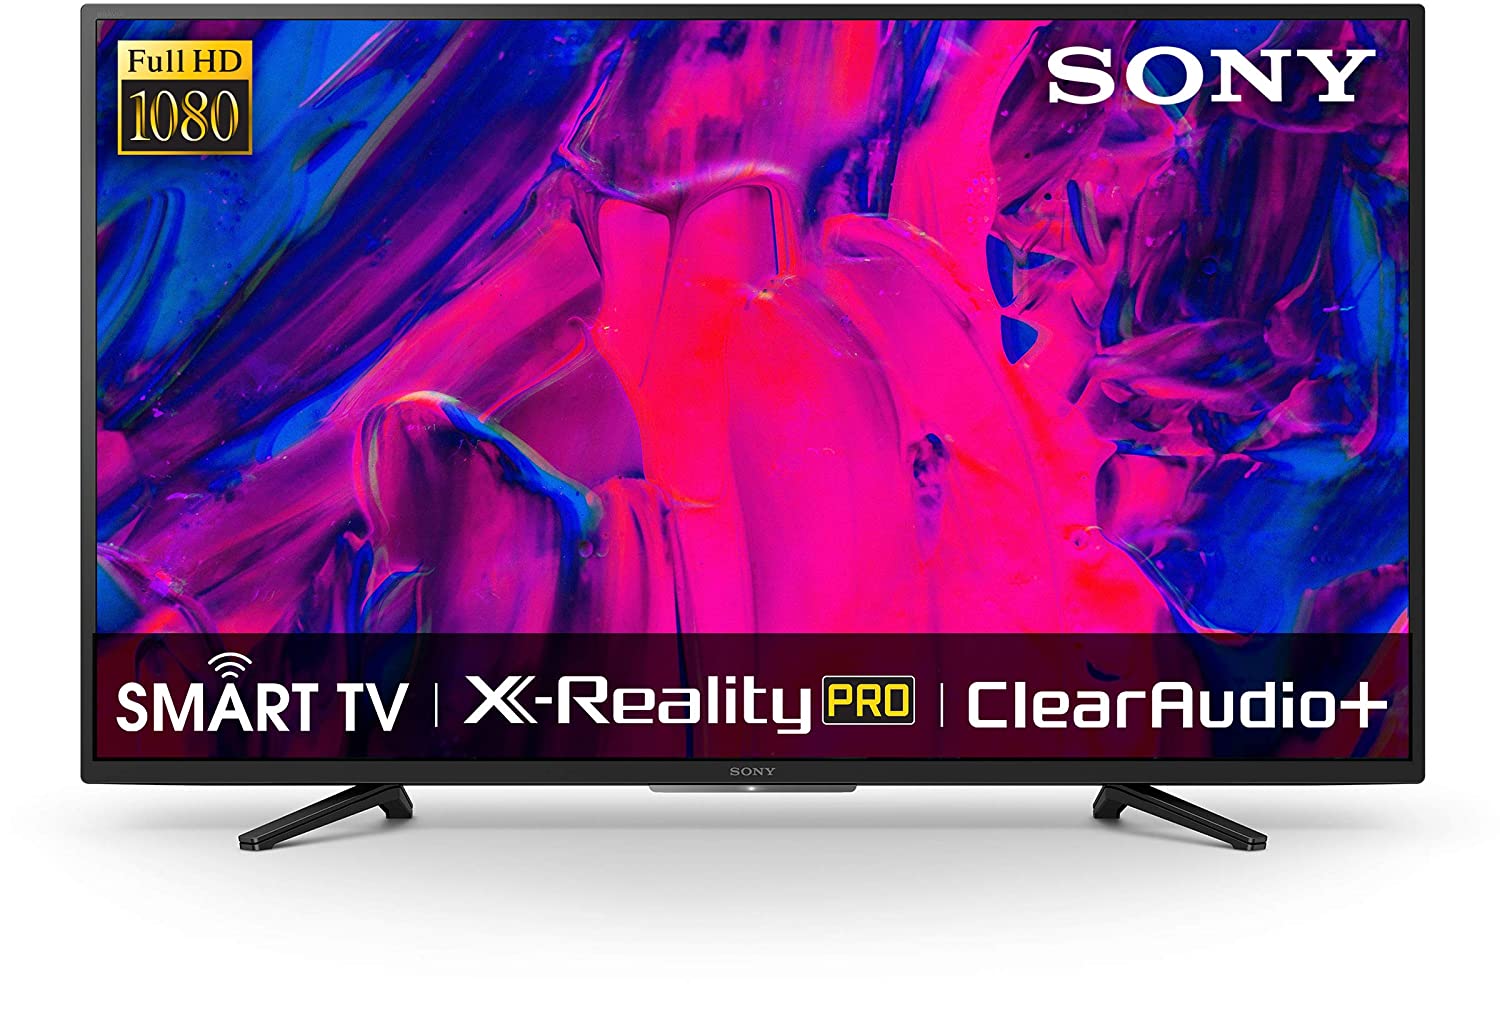 Sony Bravia full HD smart LED TV   